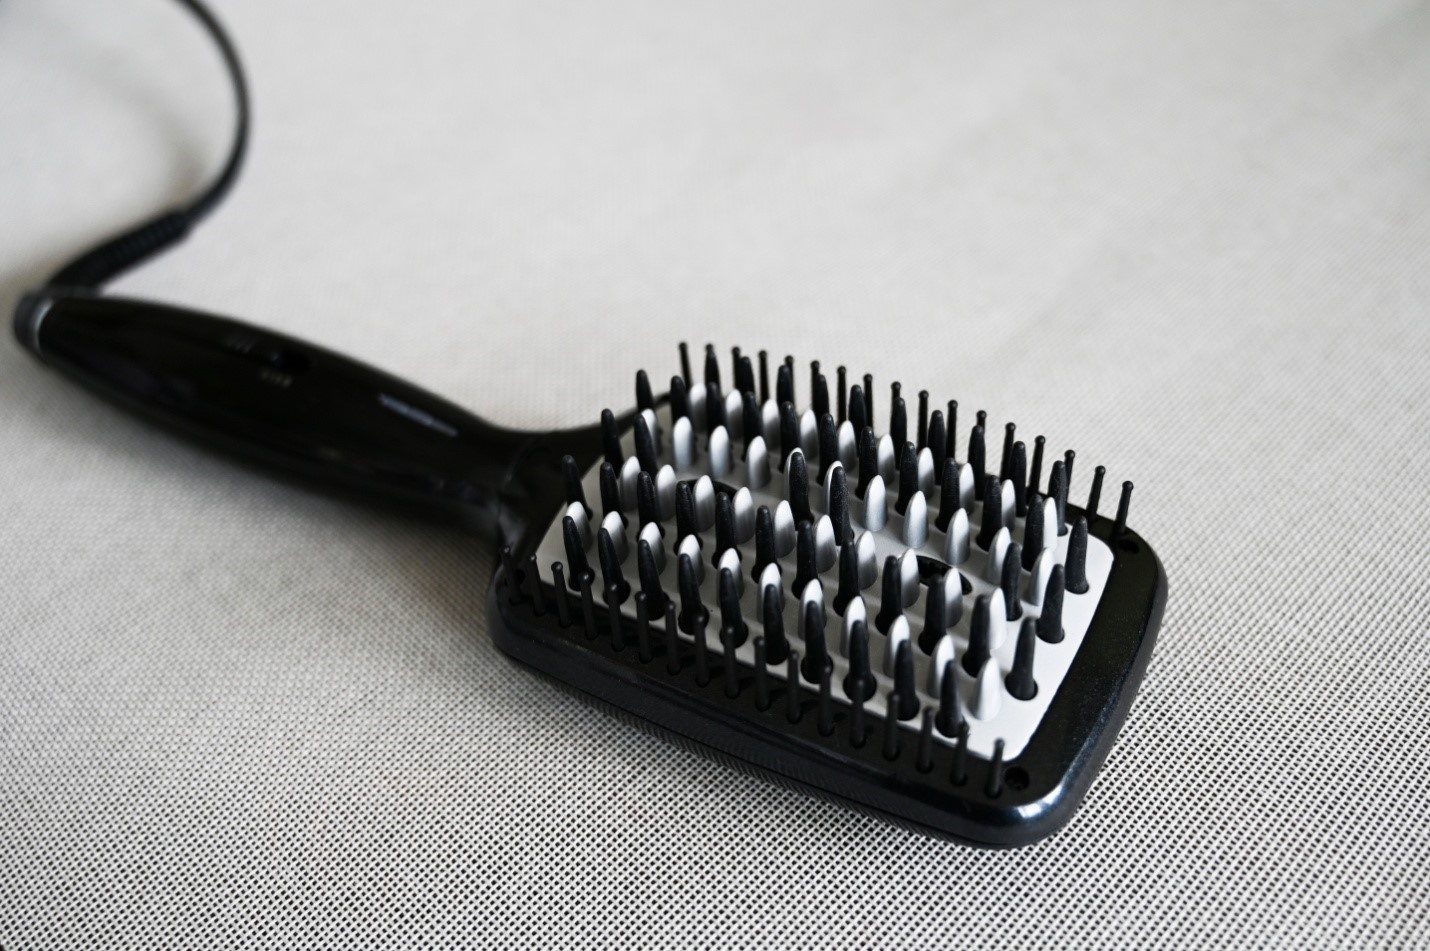 Hair Straightening Brush for Busy-Girls-On-the-Go 12